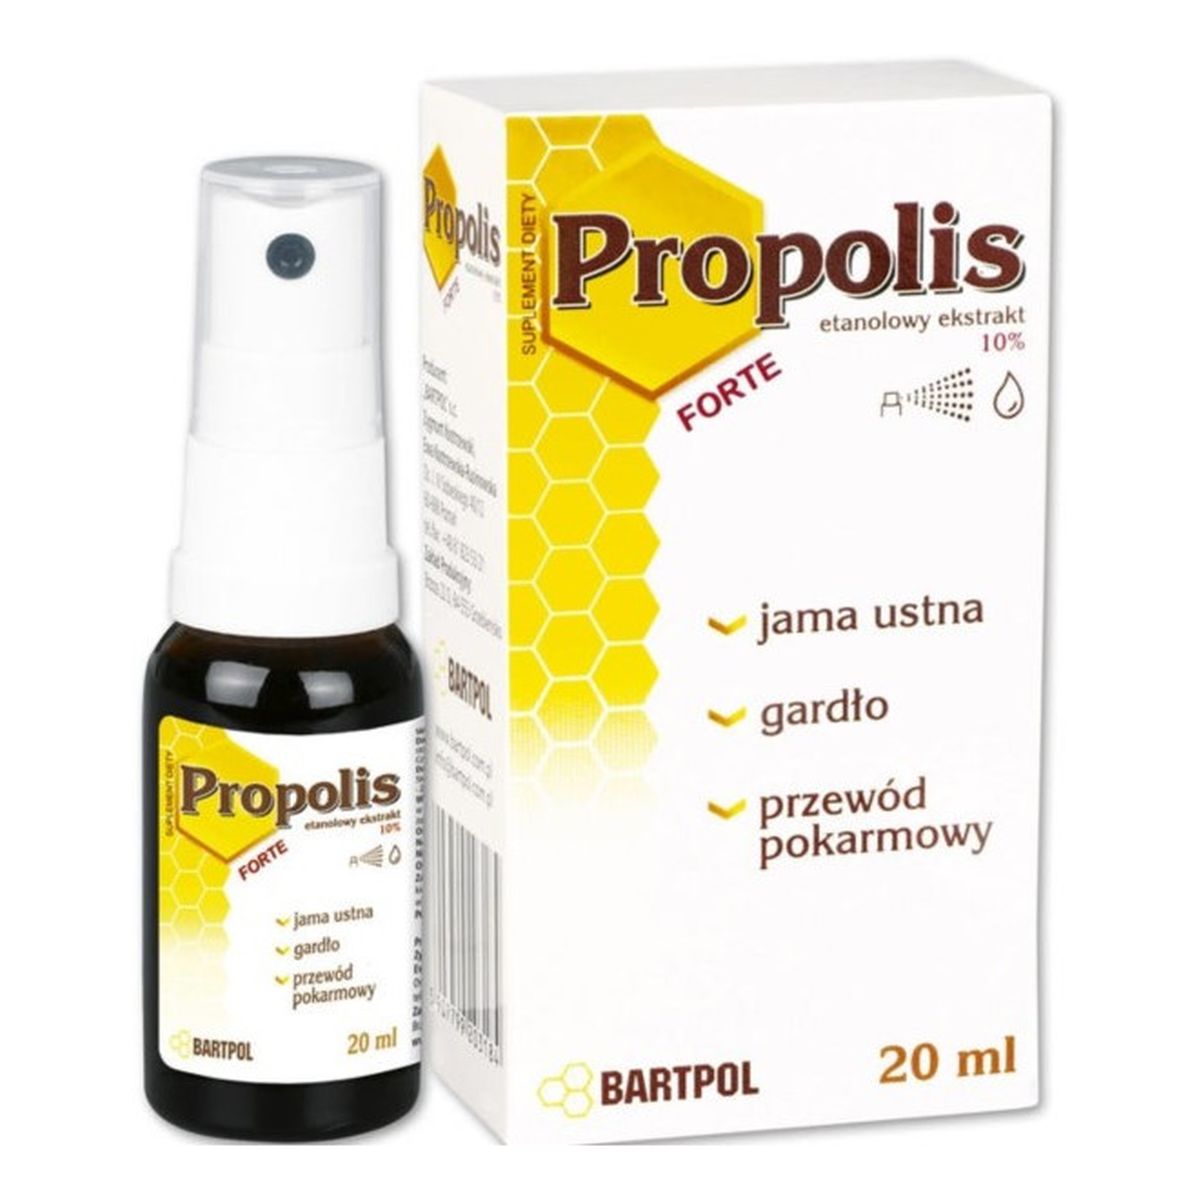 Bartpol Propolis forte etanolowy ekstrakt 10% suplement diety 20ml